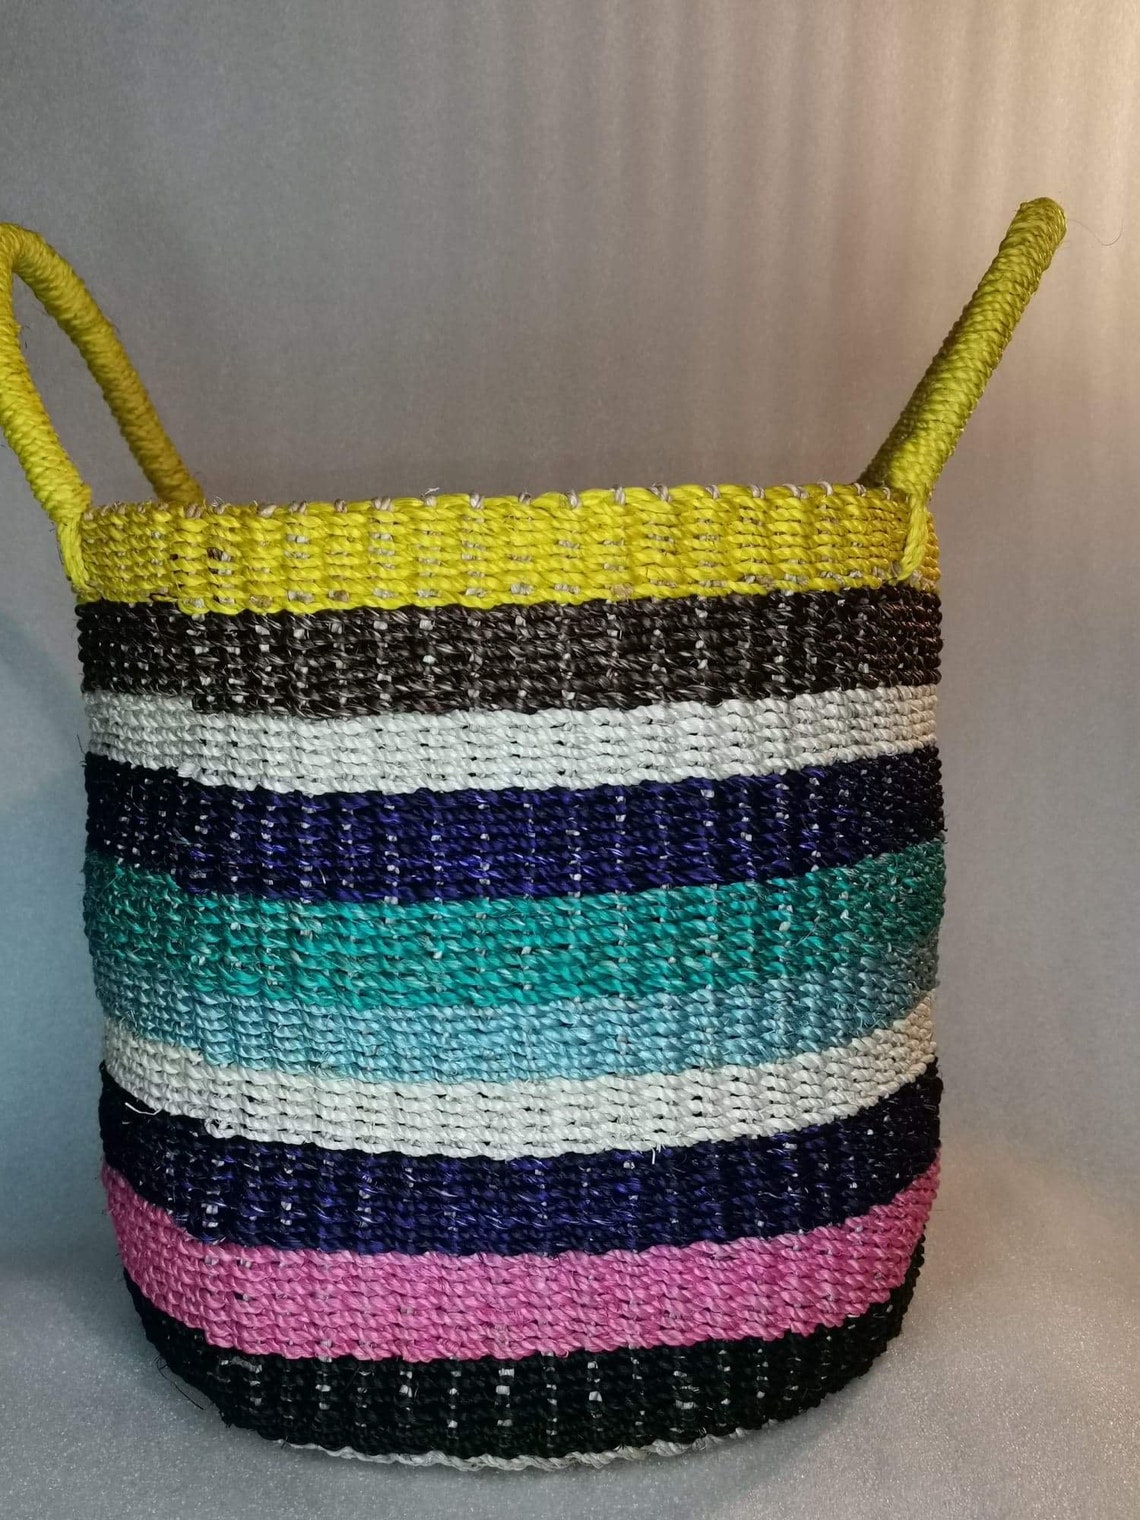 Multicoloured striped abaca basket | Etsy